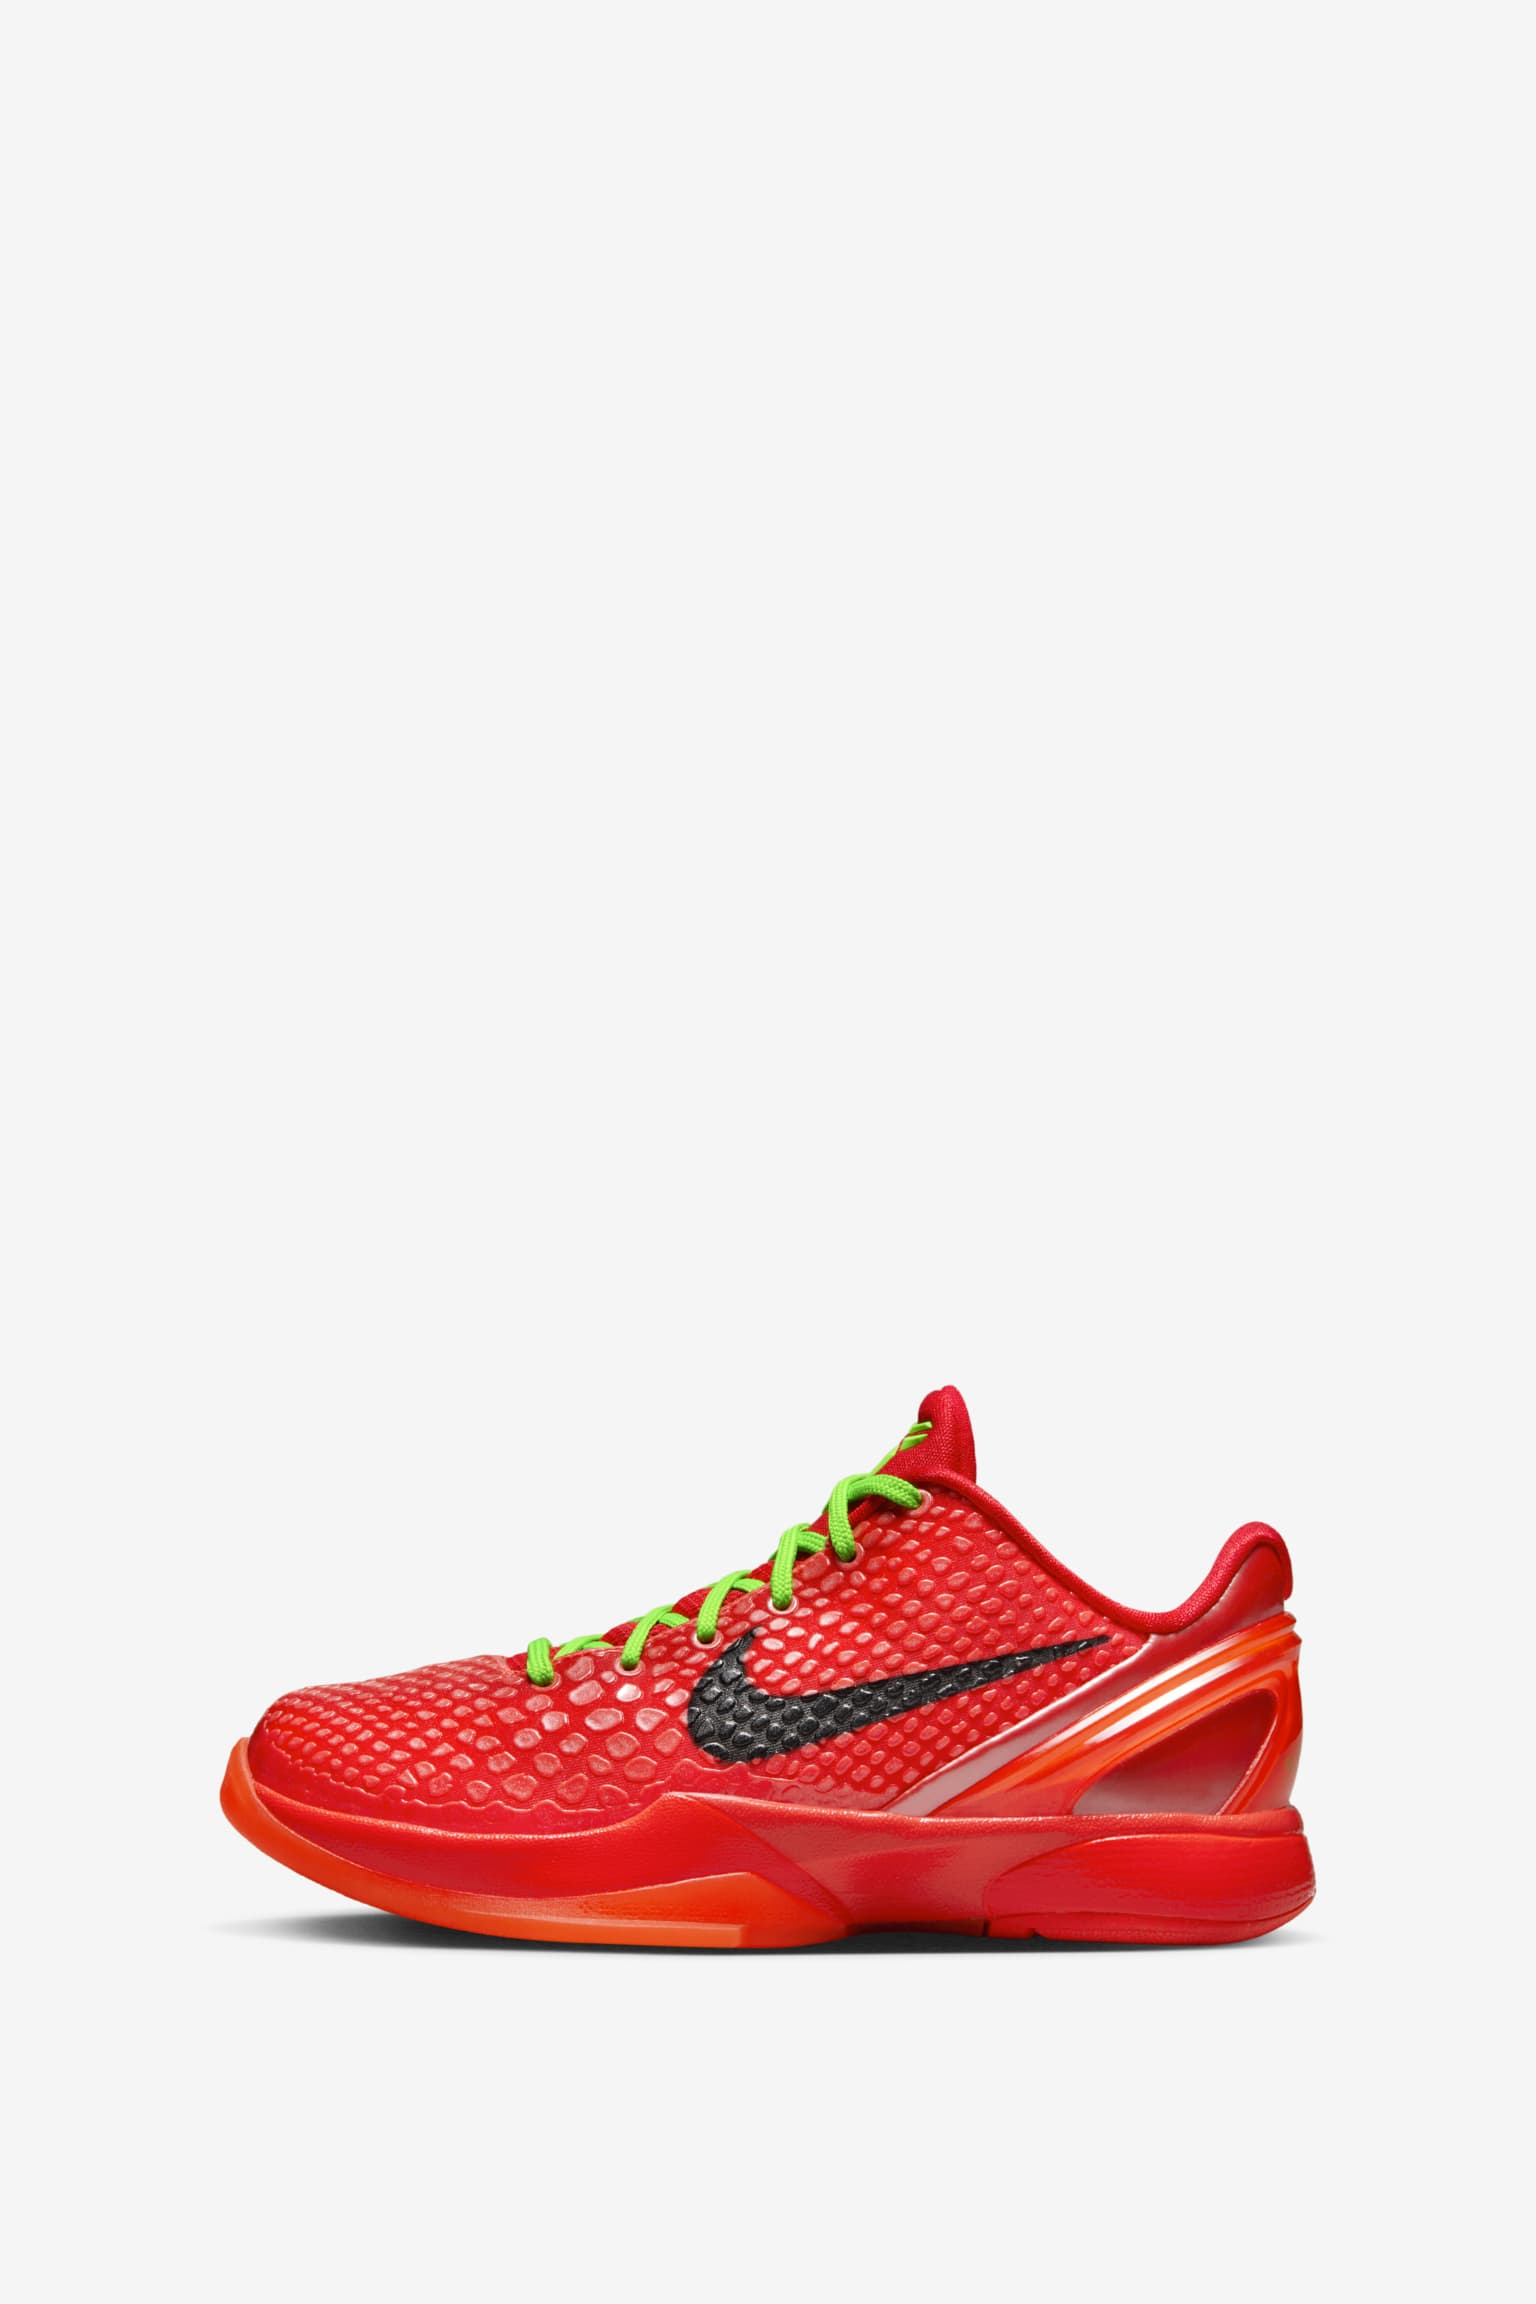 Kobe 6 Protro 'Reverse' (FV4921-600) Release Date. Nike SNKRS